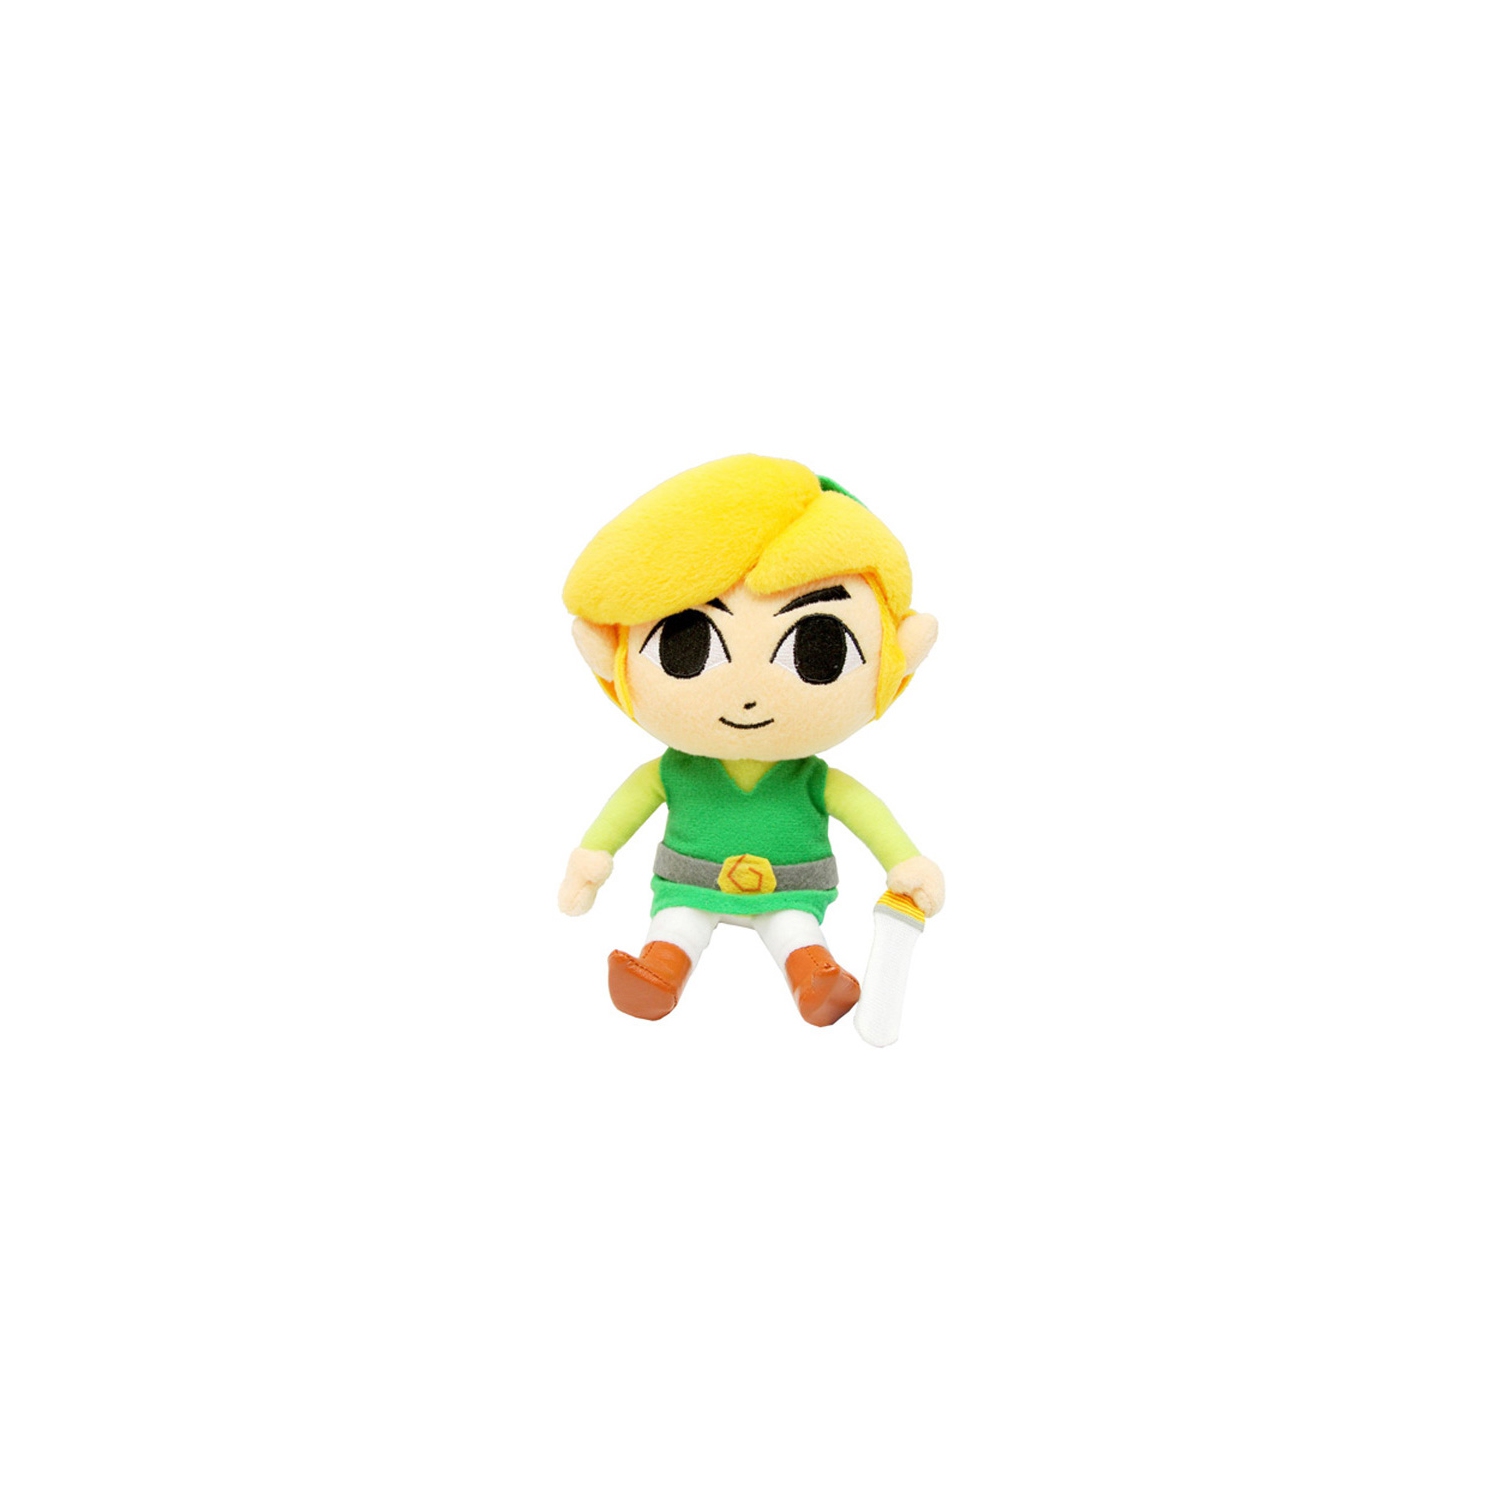 The Legend of Zelda The Wind Waker Plush Toy 8" HD Link Little Buddy